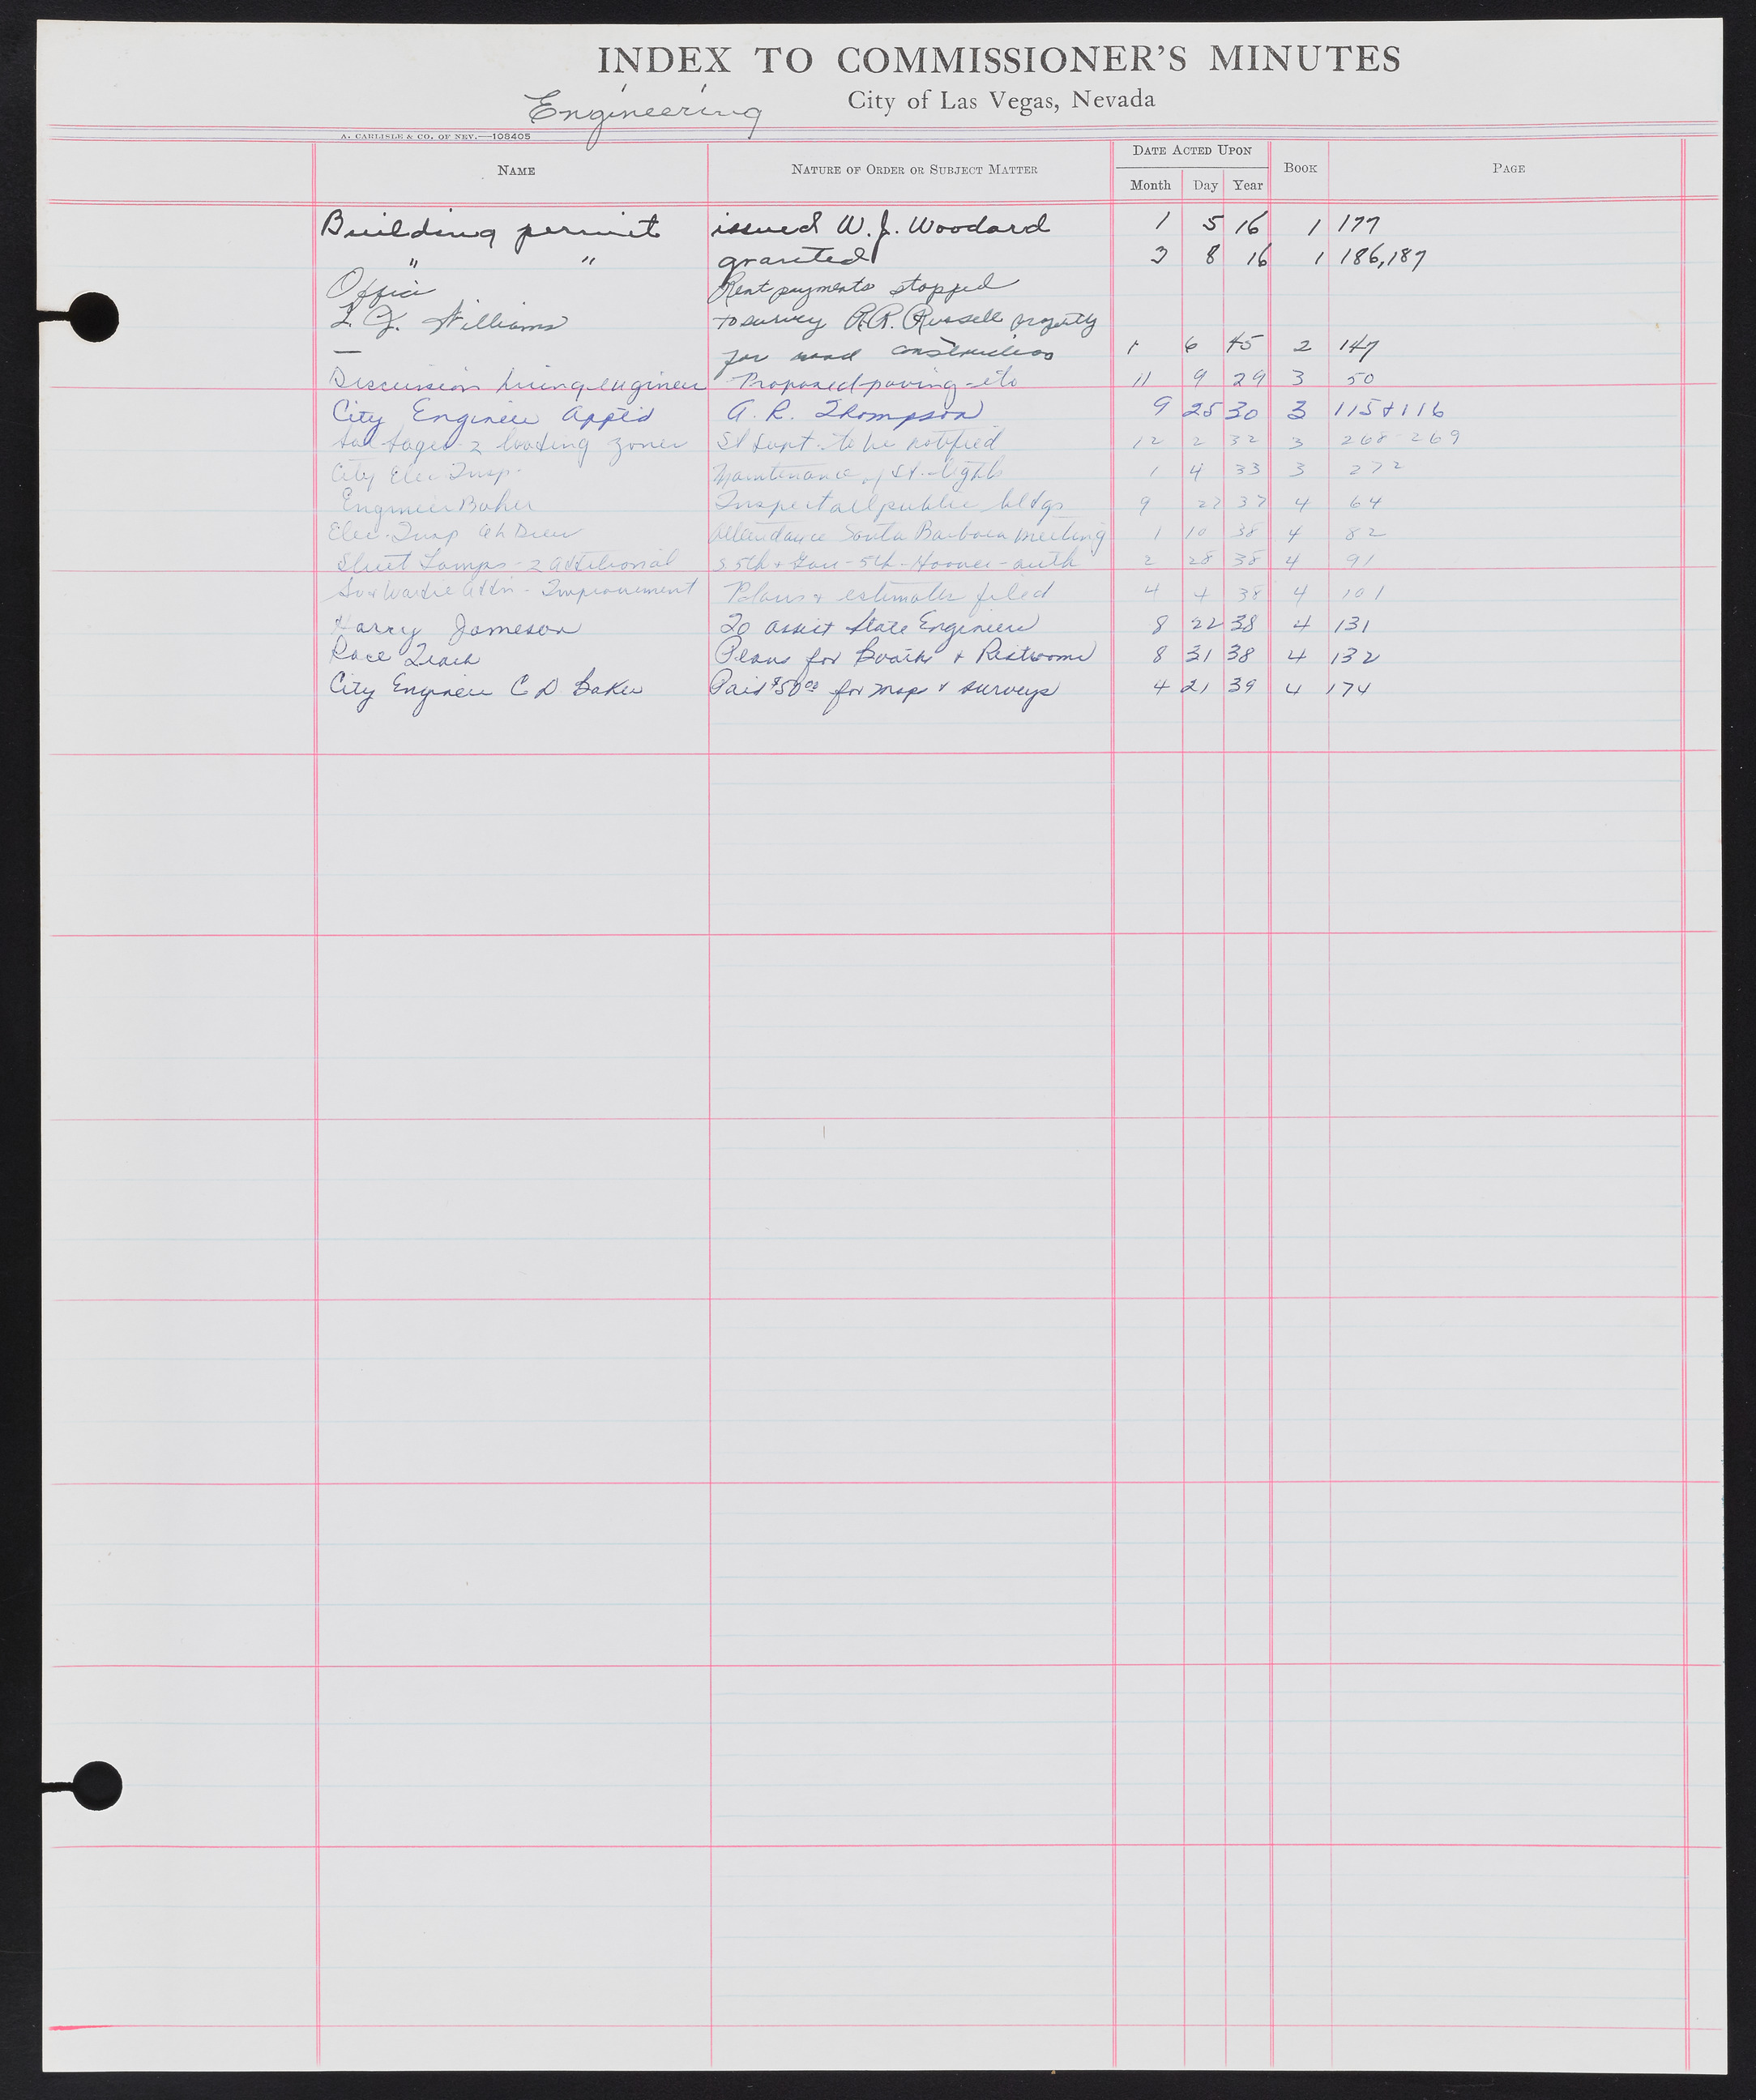 Las Vegas City Commission Minutes Index 1, 1911-1960: documents, item 127